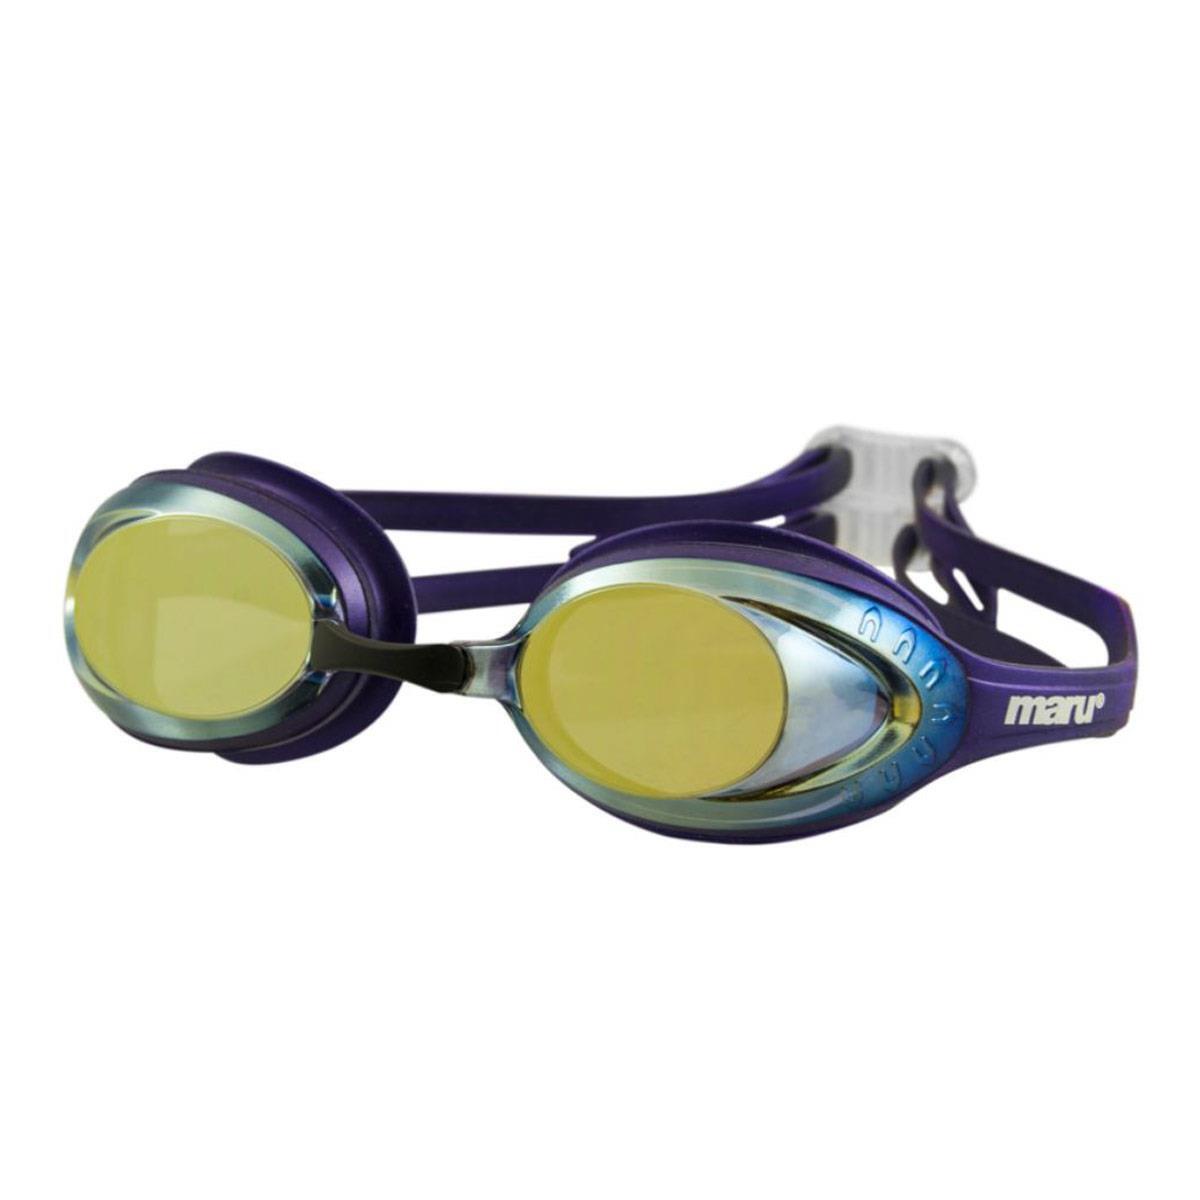 MARU Maru Sonic Mirror Anti Fog Goggles - Purple/ Multi